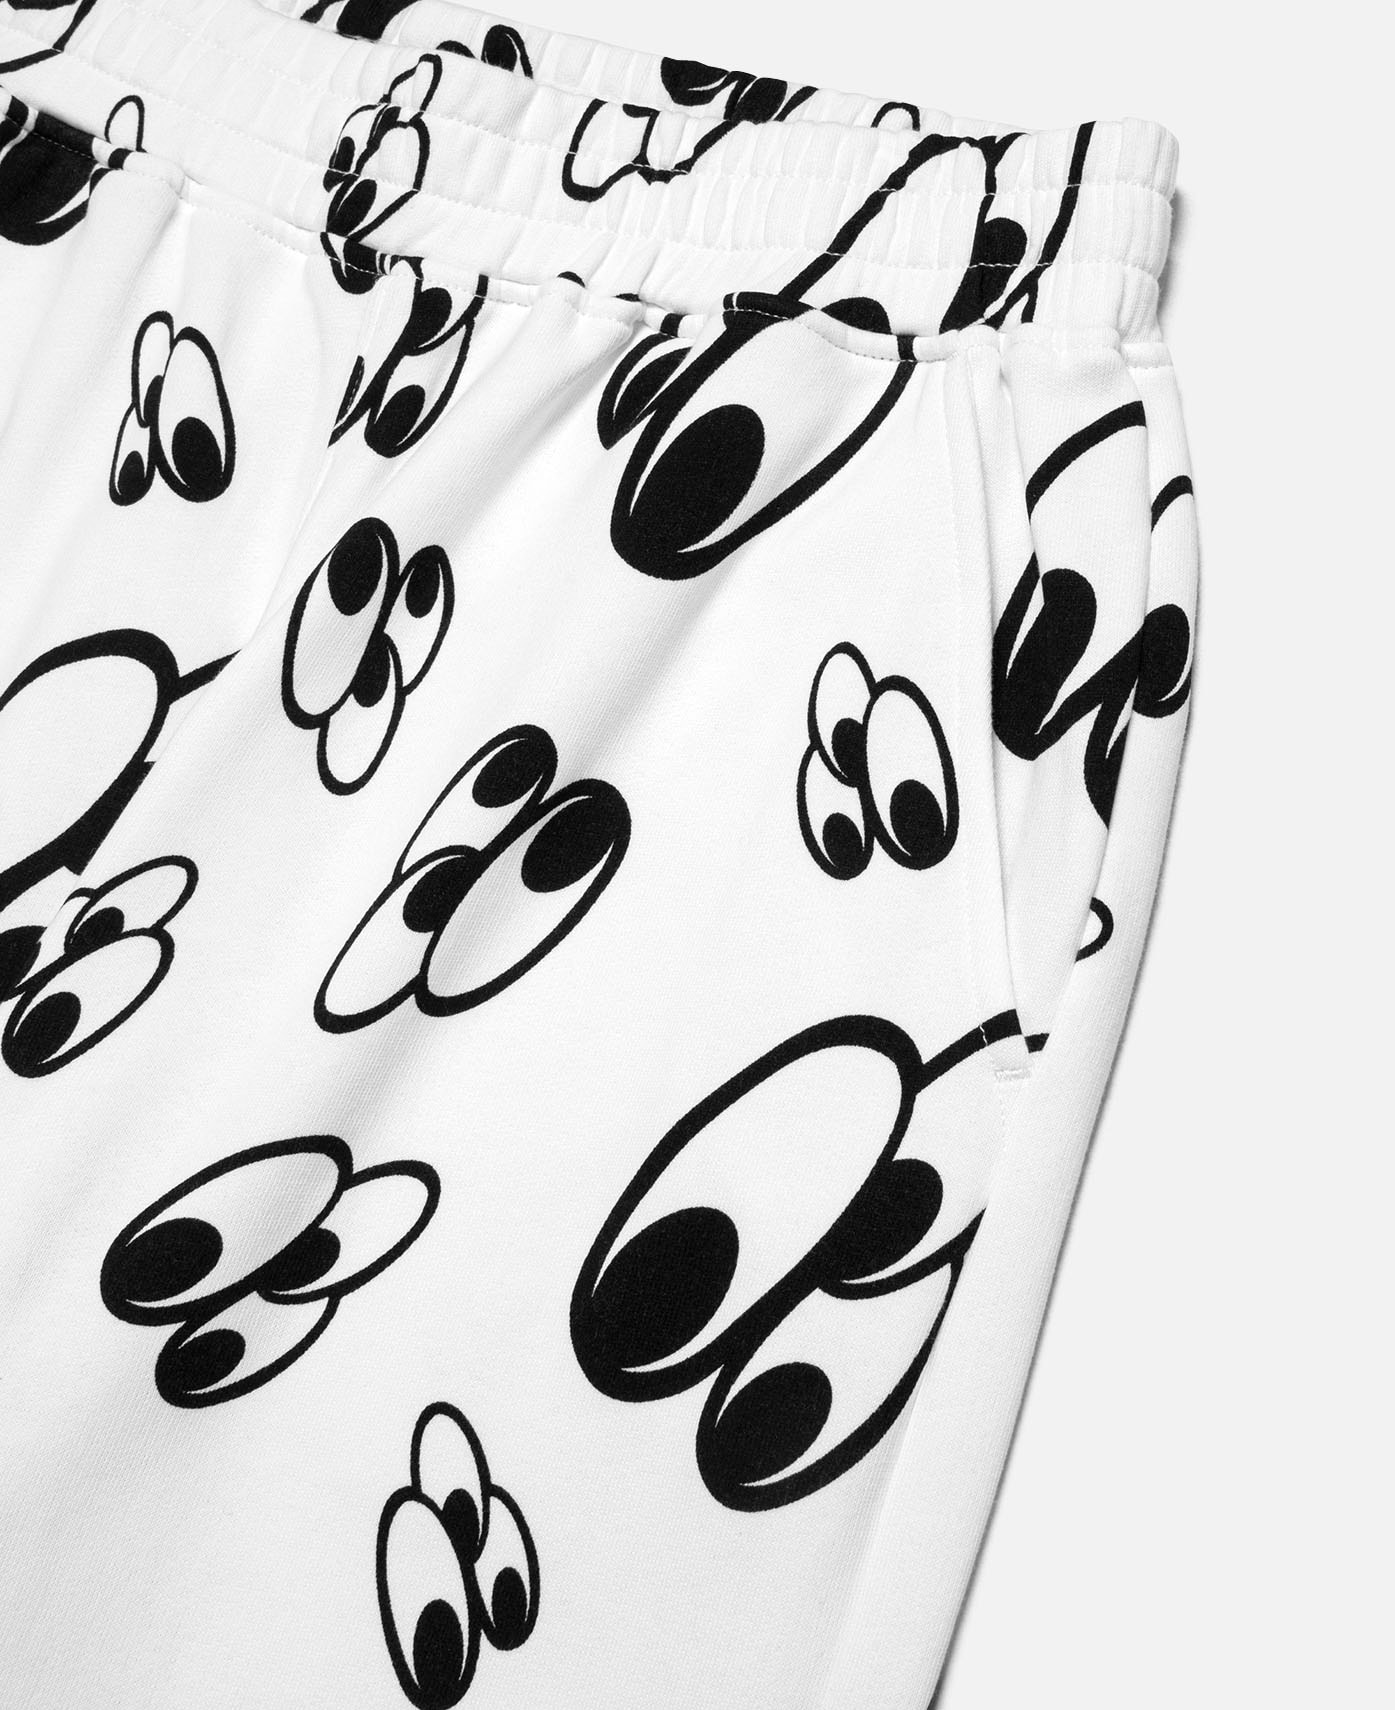 3125C x CLOT x MEDICOM TOY 推出全新「BE@RBRICK 3-Eyed Mickey」及胶囊服饰系列